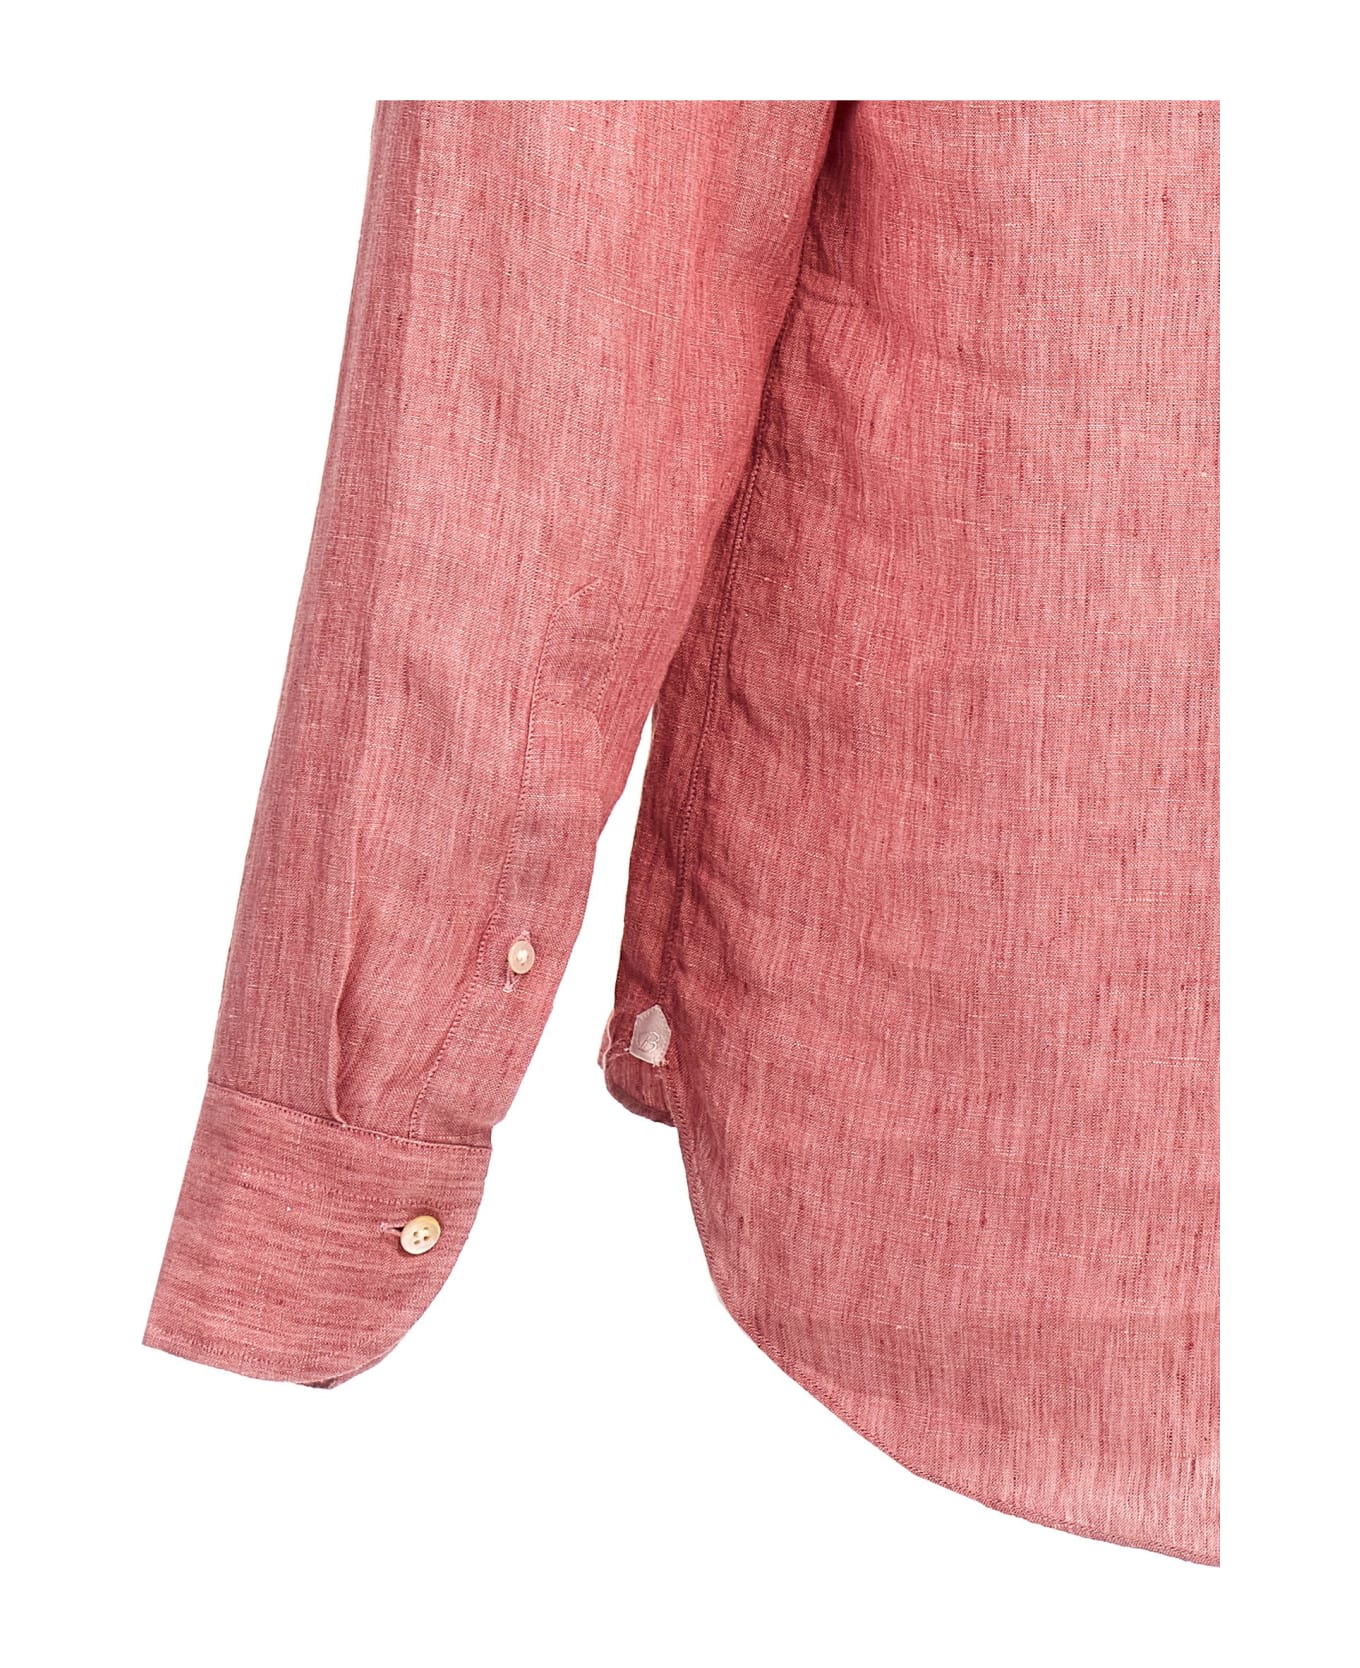 Borriello Napoli Linen Shirt - Pink シャツ